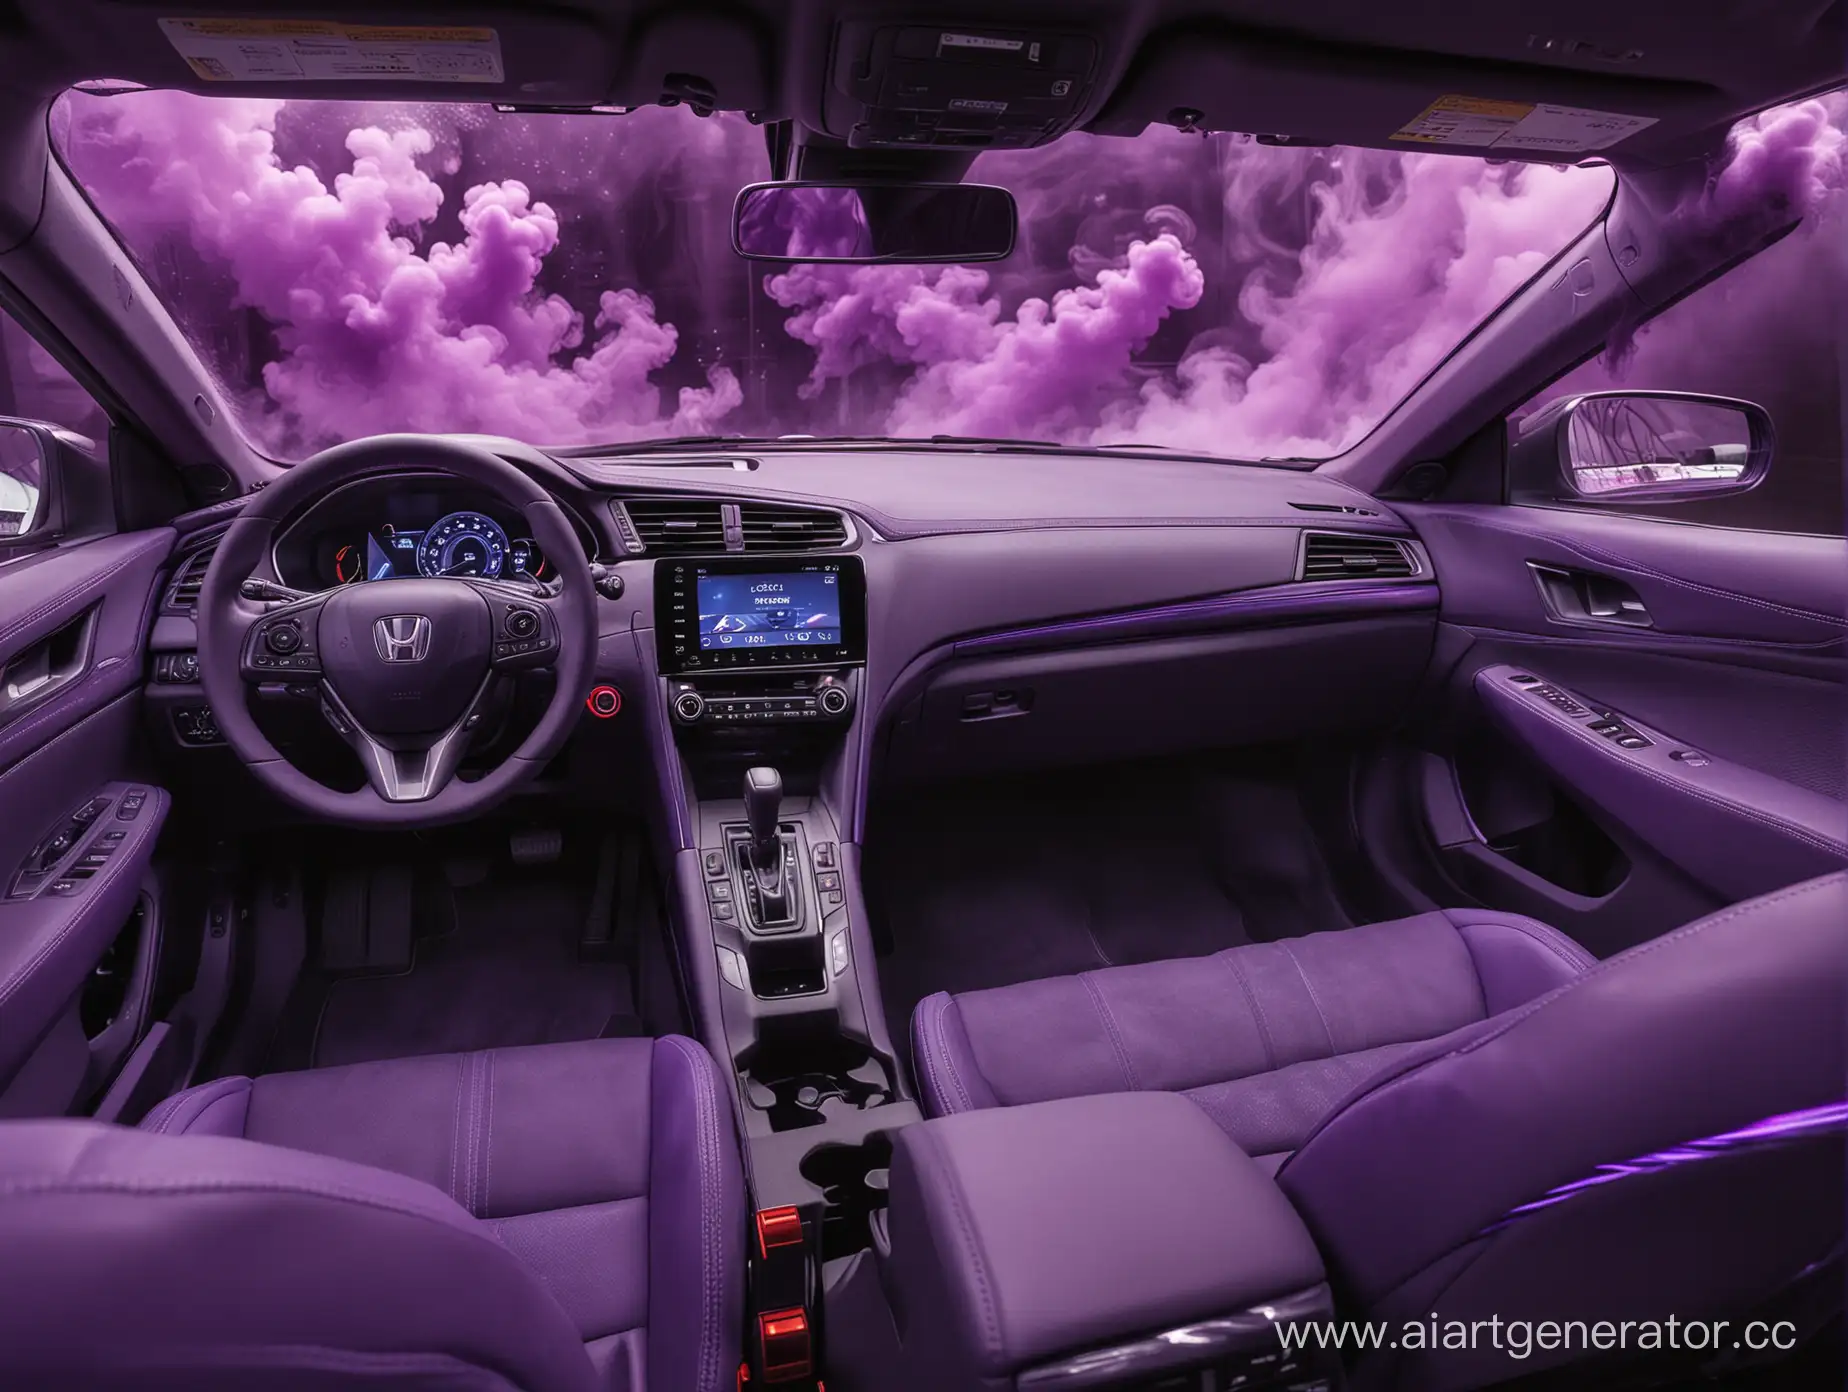 Vibrant-Purple-Smoke-Envelops-Honda-Car-Interior-with-Detailed-Multimedia-System